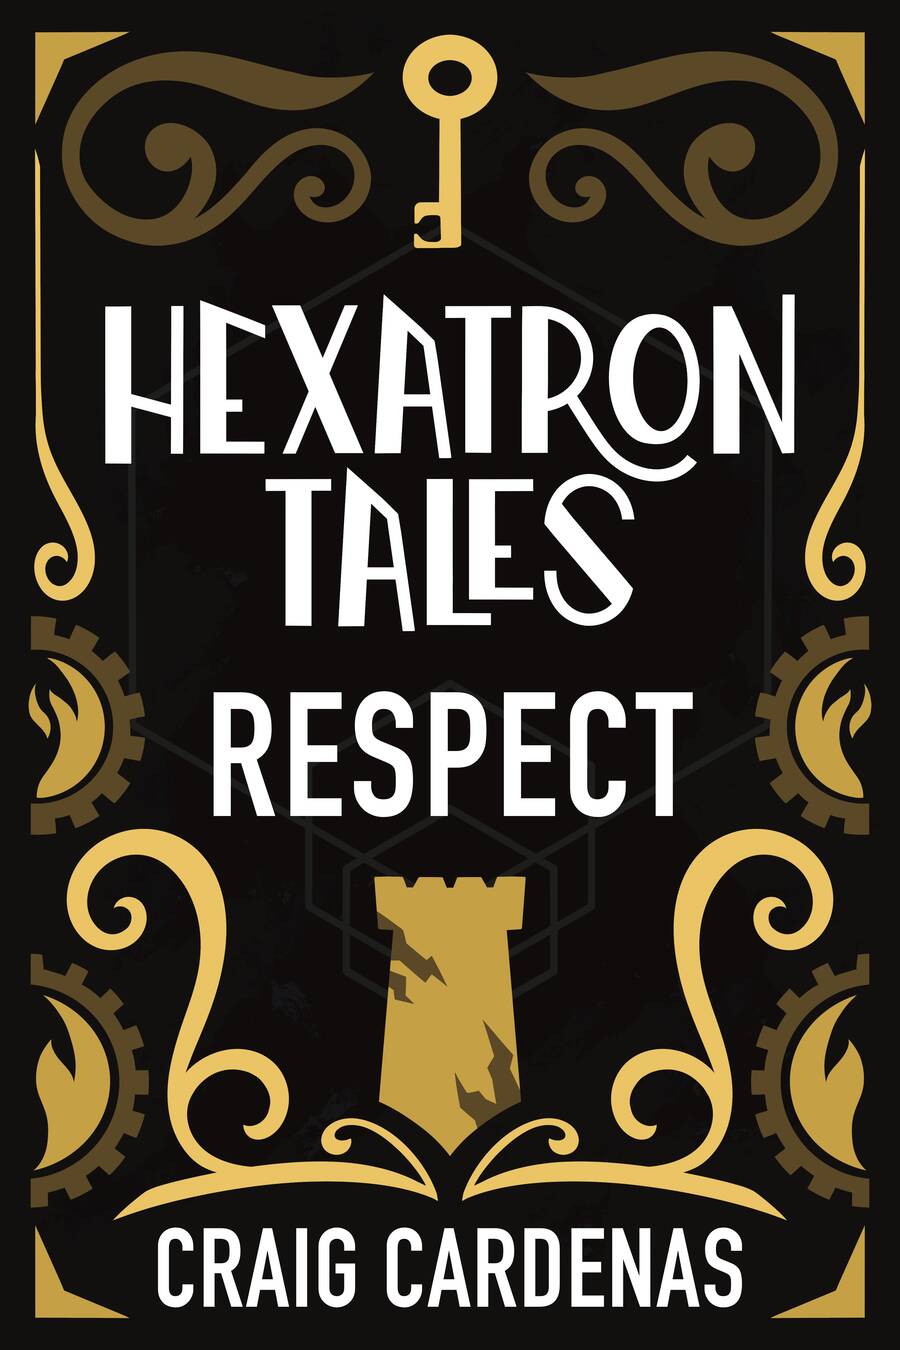 Hexatron Tales Respect